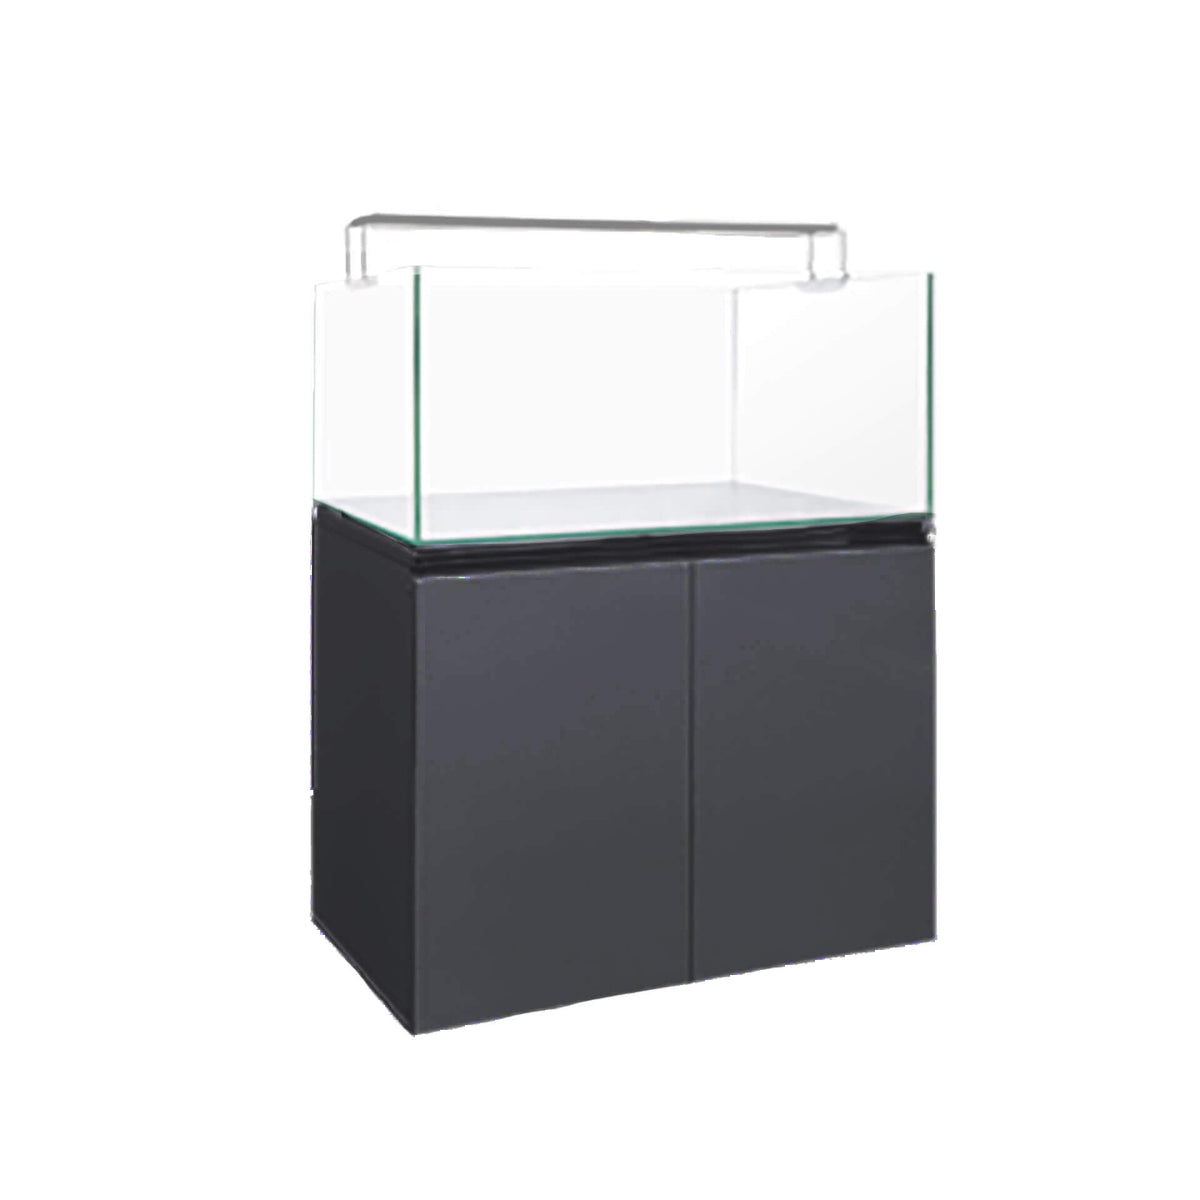 Dymax GS Aquarium Kit 60cm - Tank, Cabinet and Light (BLACK)**